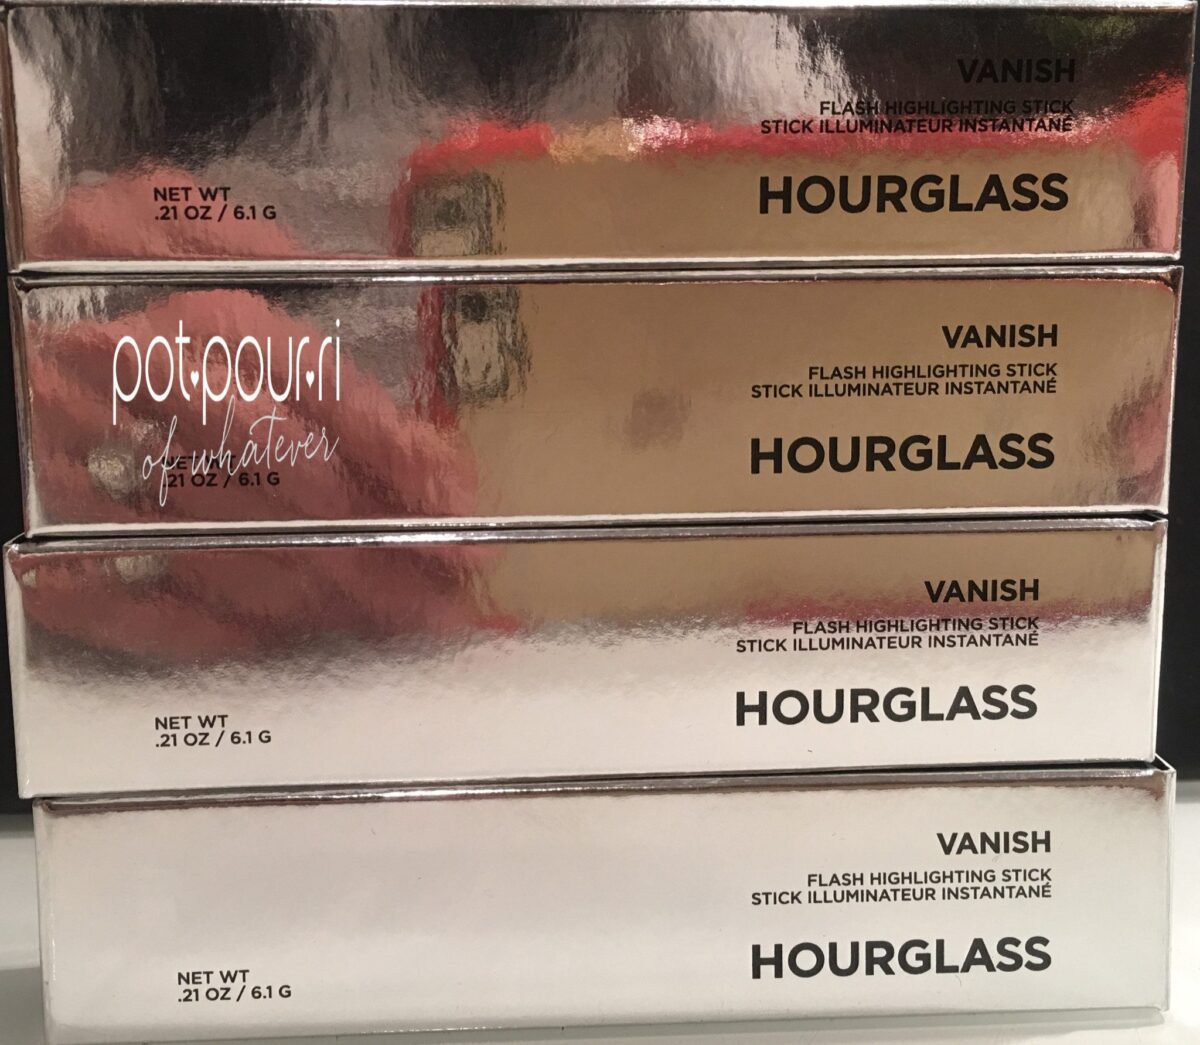 Hourglass Vanish Flash Highlighter Stick packaging